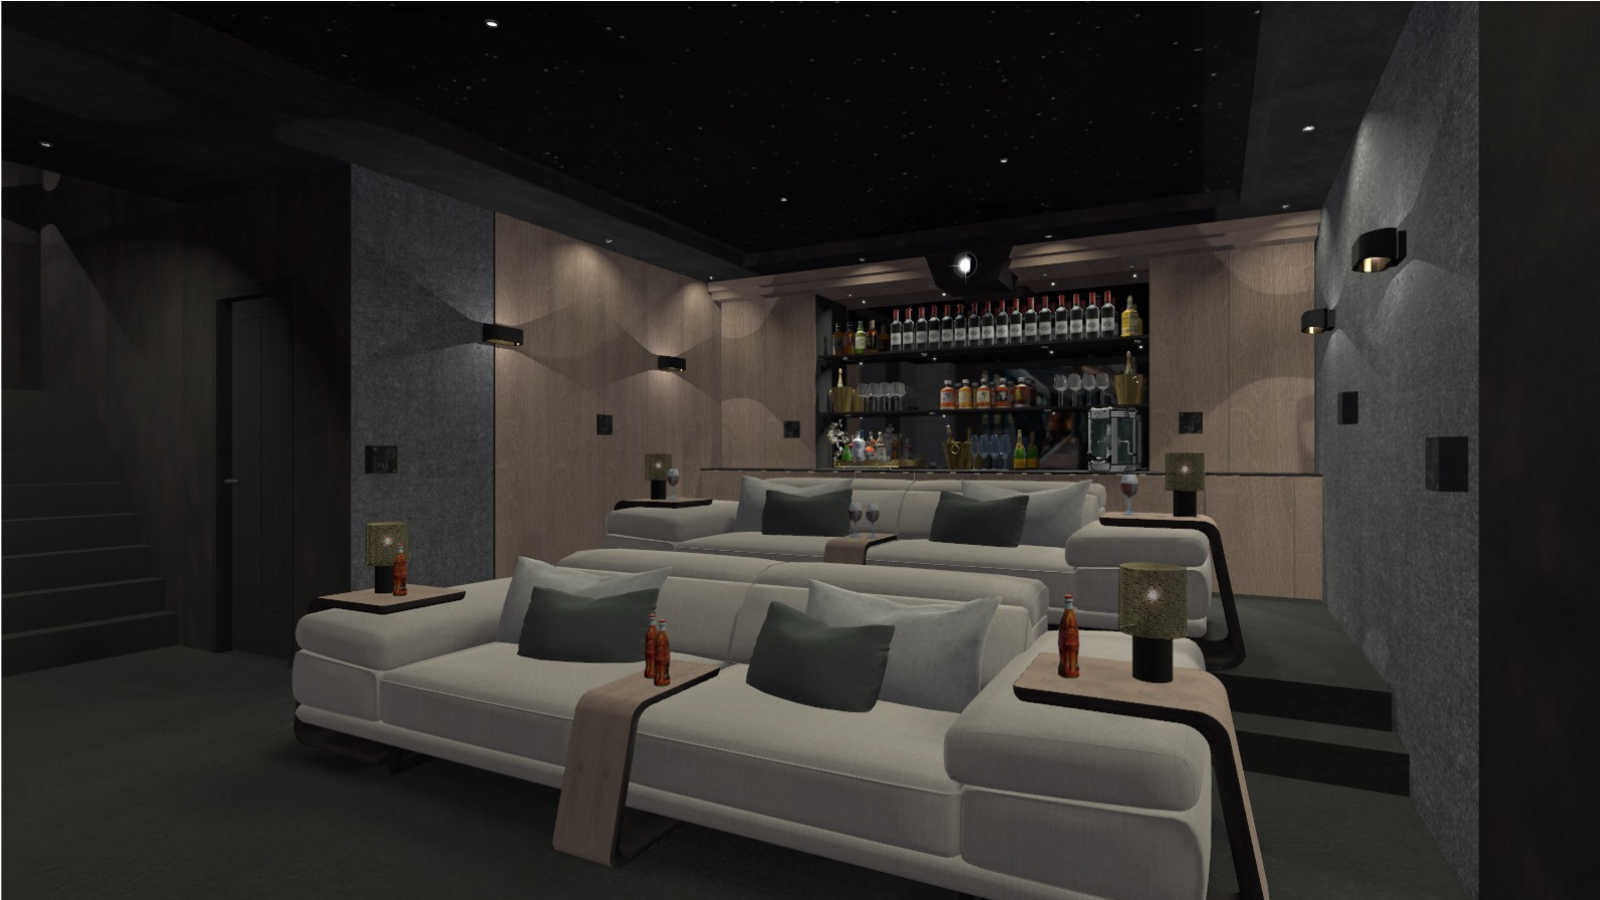 cinema render showing cinema seating and bar